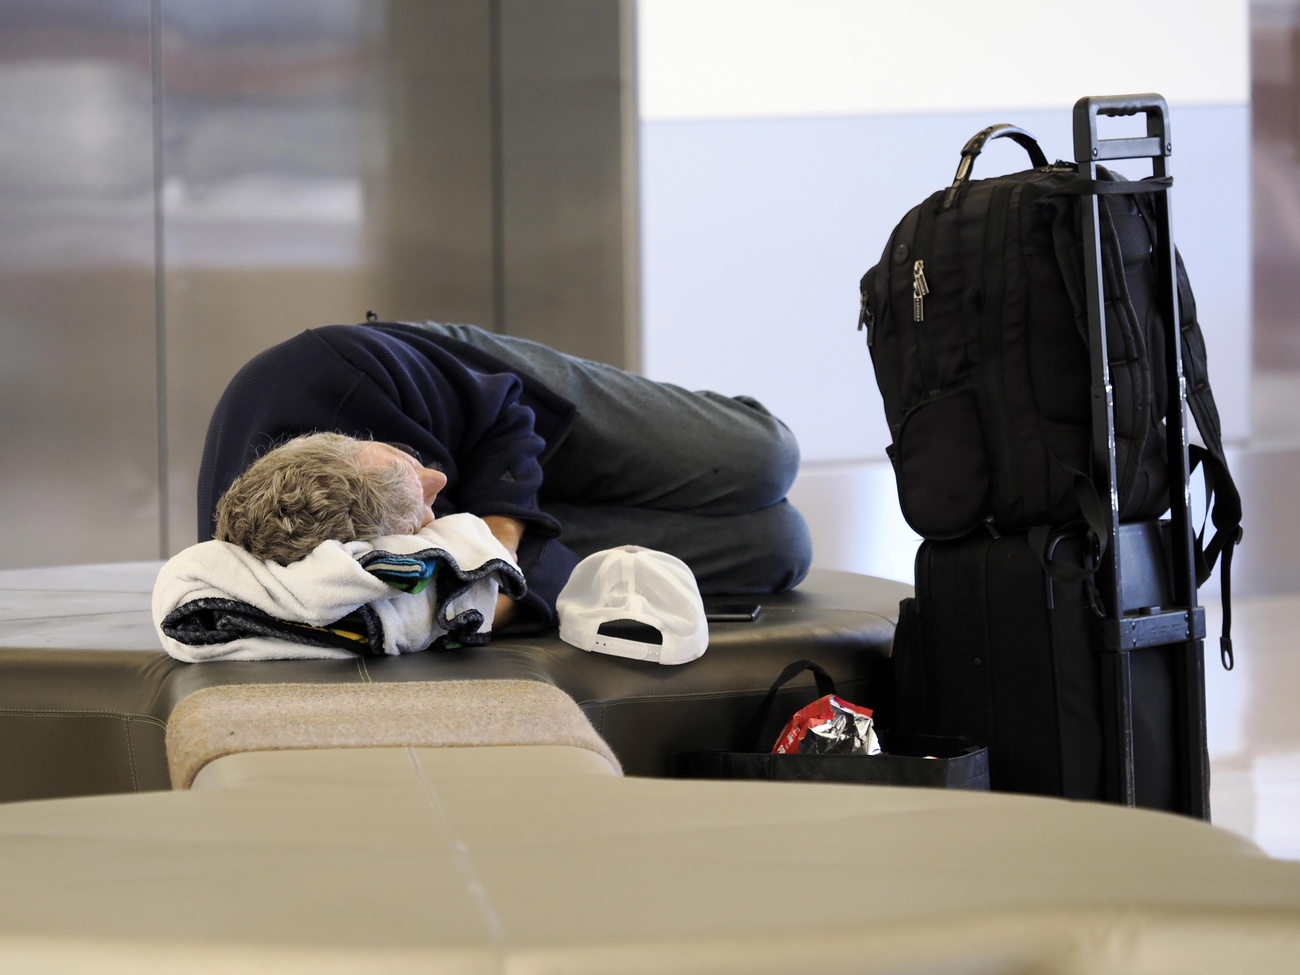 Airport passenger sleeping